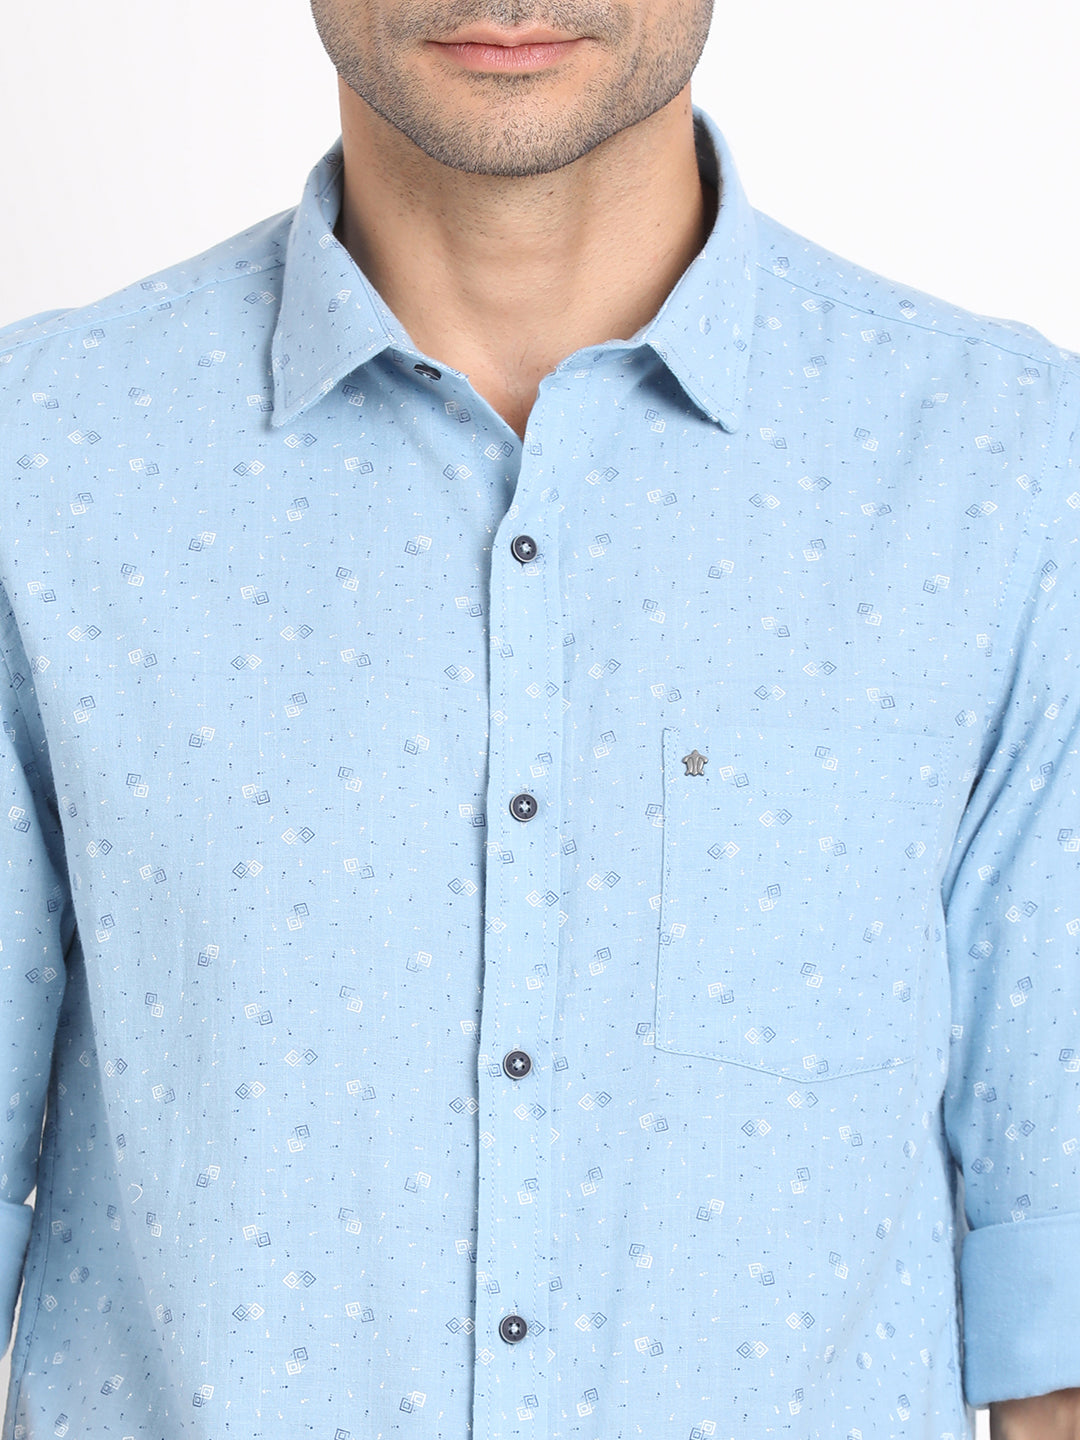 Khadi Blue Printed Slim Fit Full Sleeve Casual Shirt